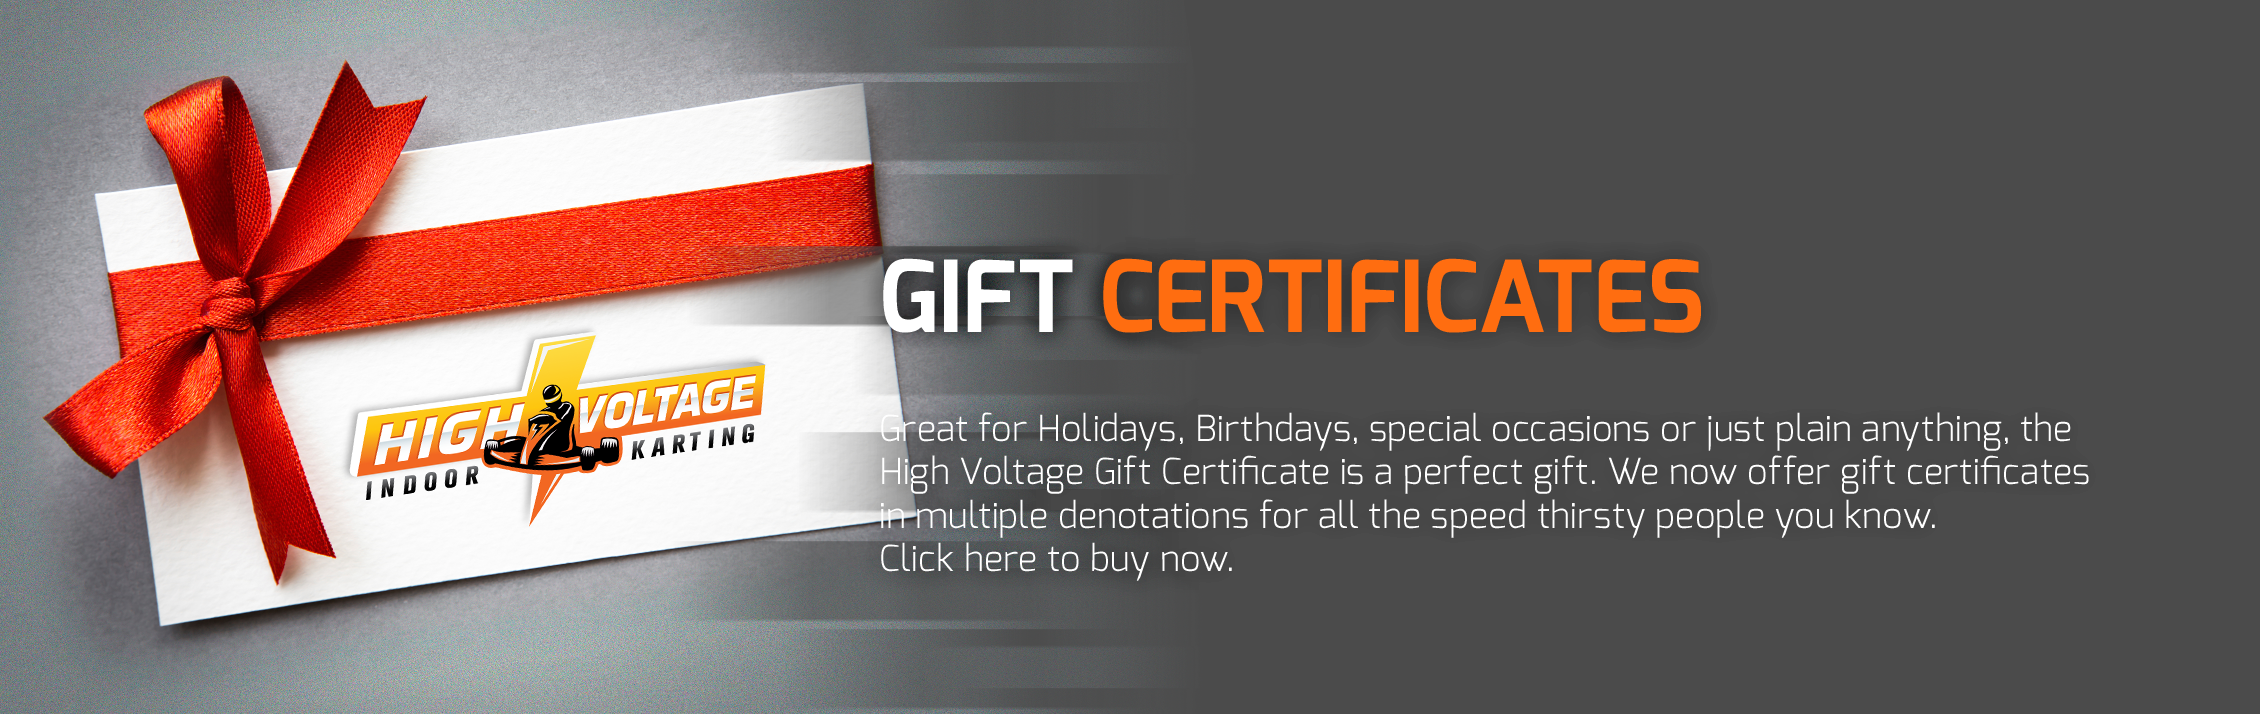 Buy Gift Certificates for High Voltage Indoor Karting